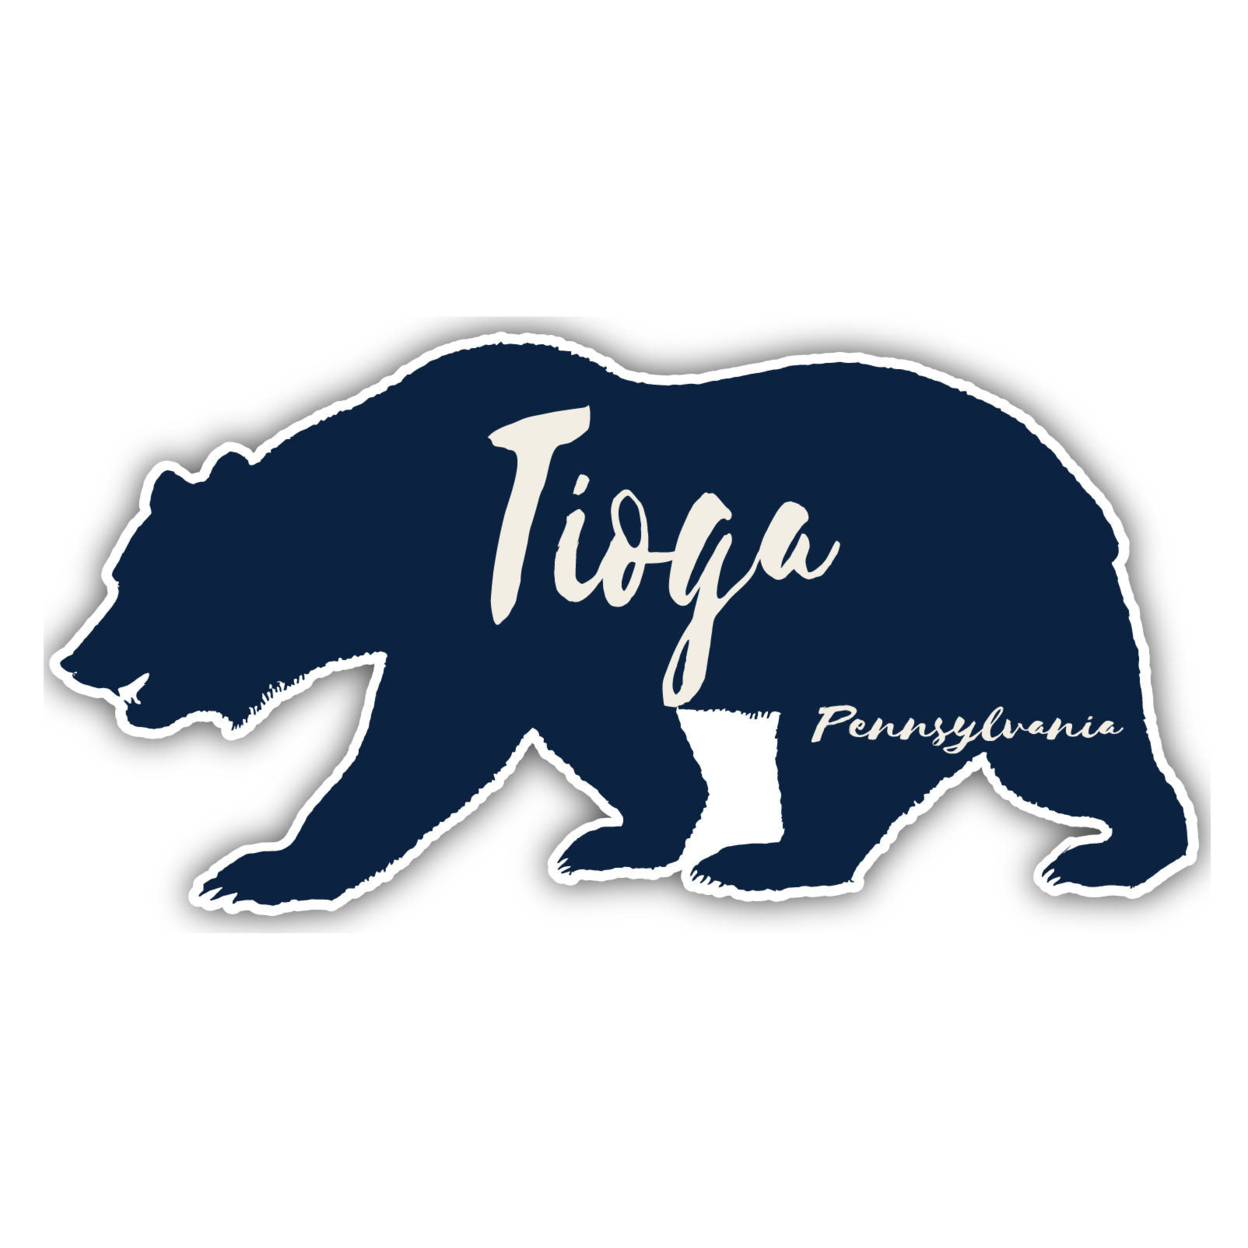 Tioga Pennsylvania Souvenir Decorative Stickers (Choose Theme And Size) - Single Unit, 4-Inch, Bear